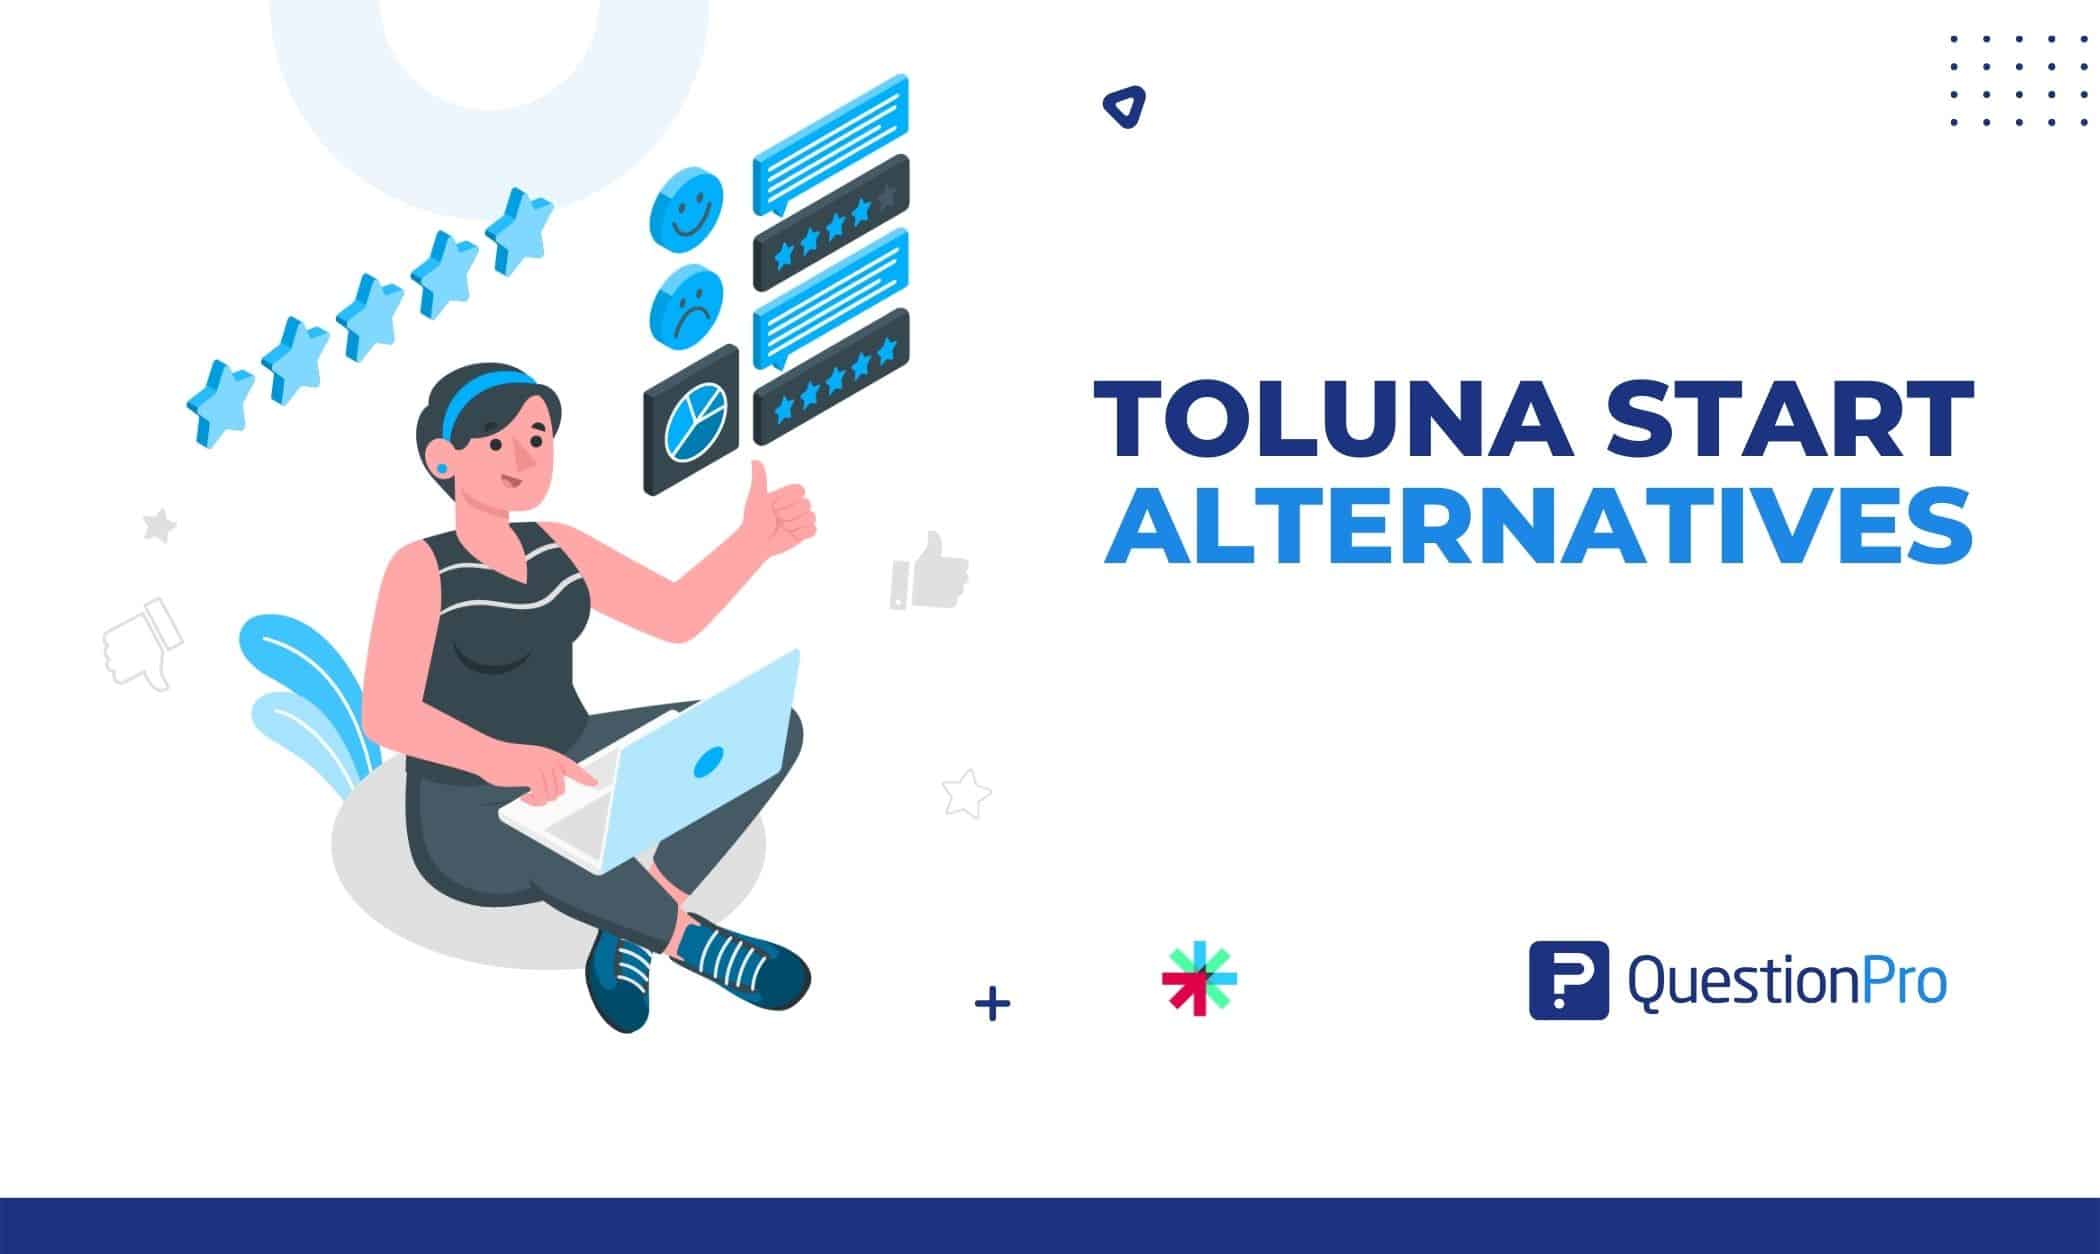 Empower your team by choosing better software to meet the needs of your business. We present the Top 10 Best Toluna Start alternatives below.